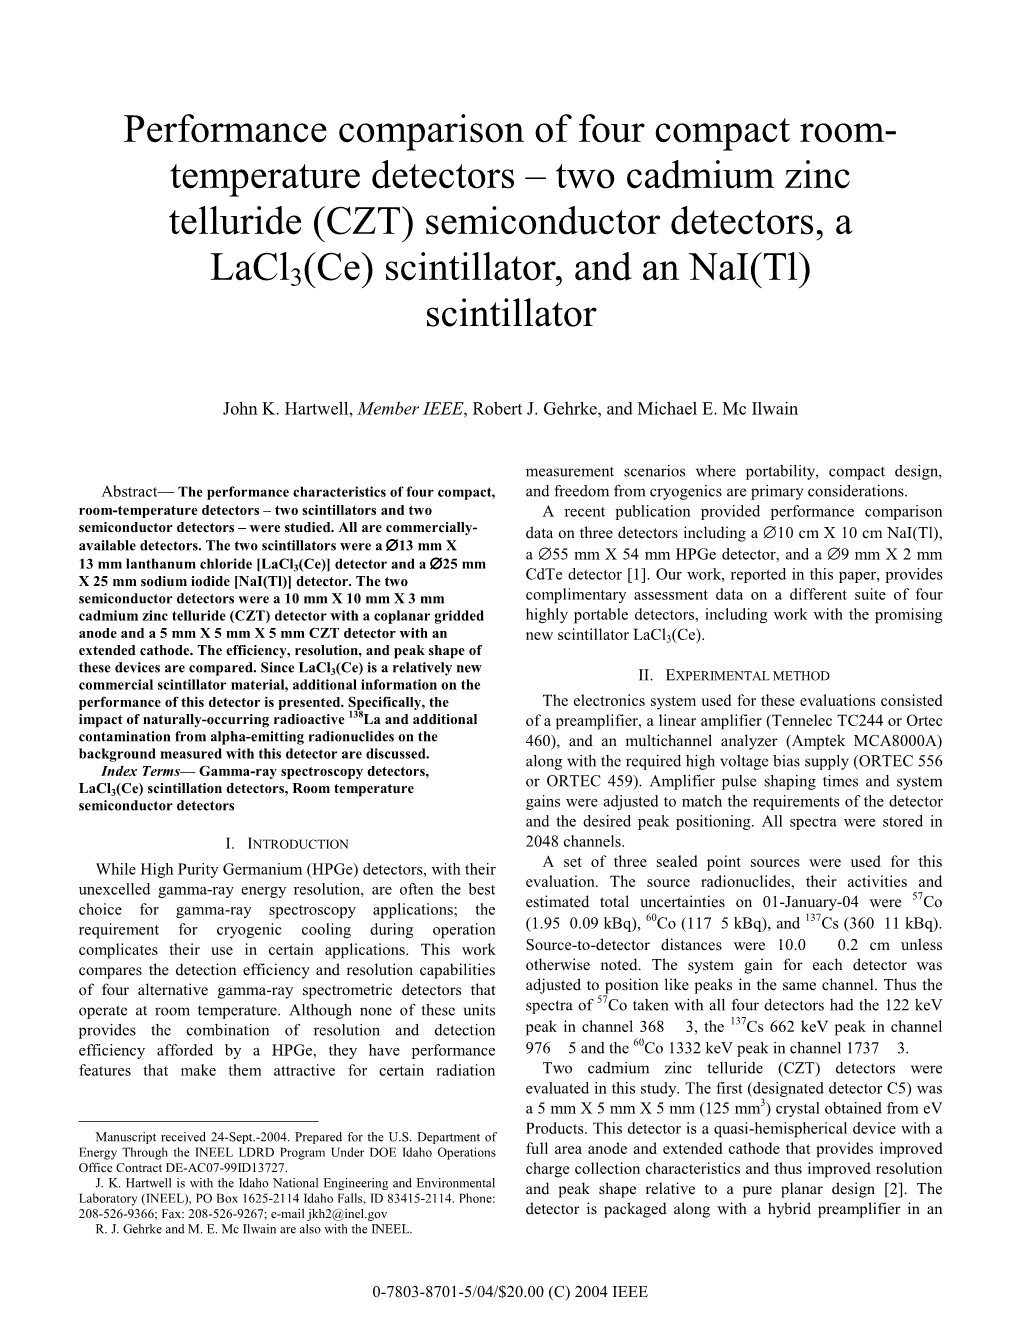 Two Cadmium Zinc Telluride (CZT) Semiconductor Detectors, a Lacl3(Ce) Scintillator, and an Nai(Tl) Scintillator